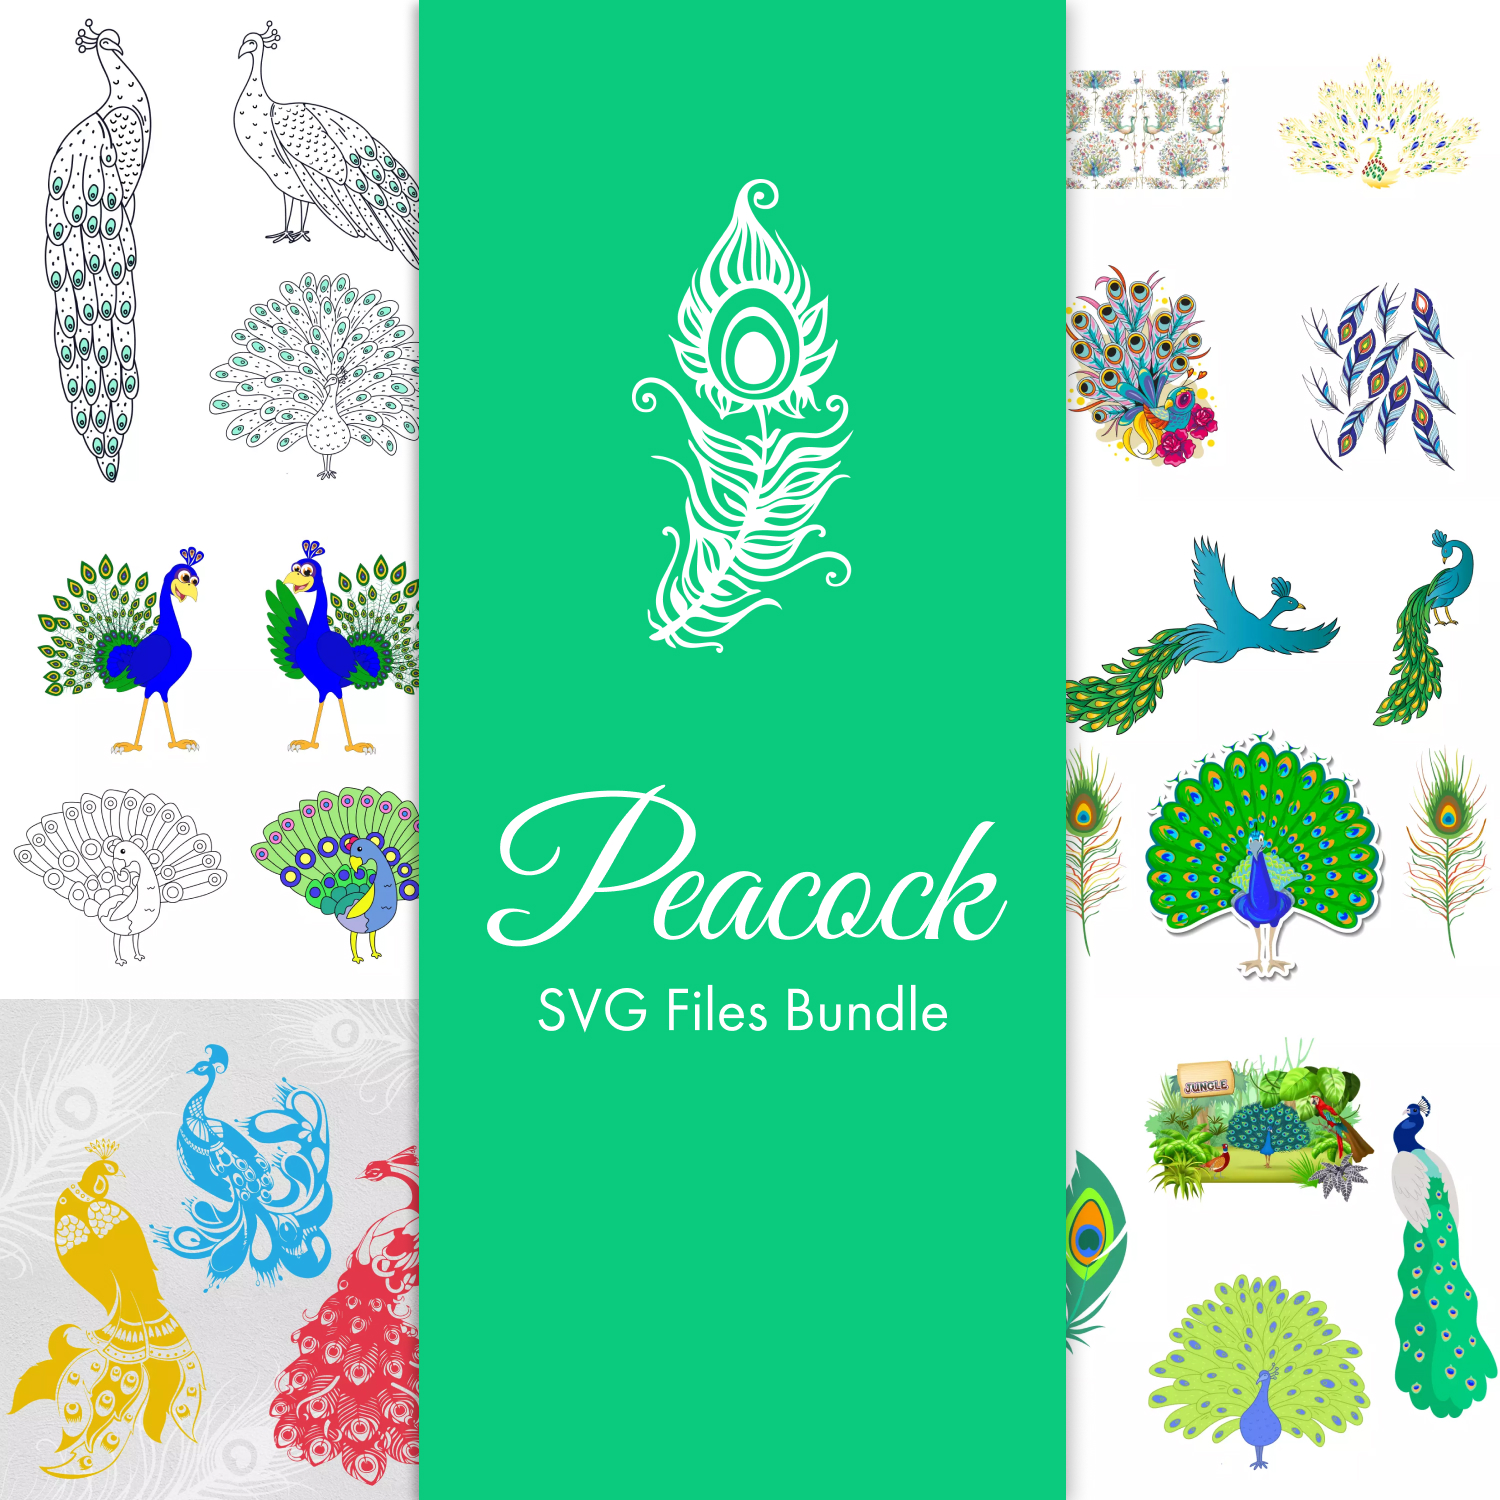 Peacock SVG Files Bundle.